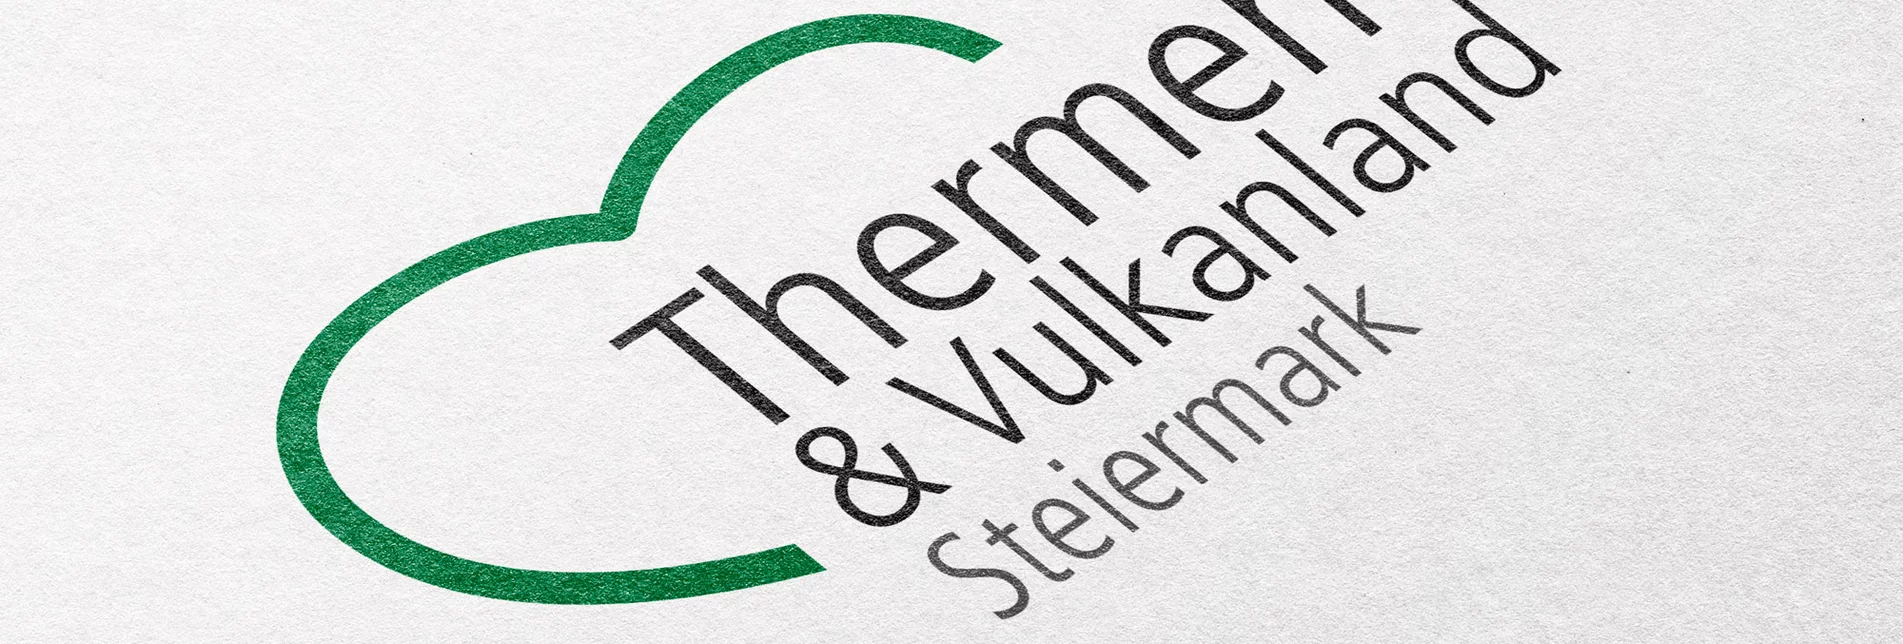 Logo Thermen- & Vulkanland | © Thermen- & Vulkanland | rawpixel.com